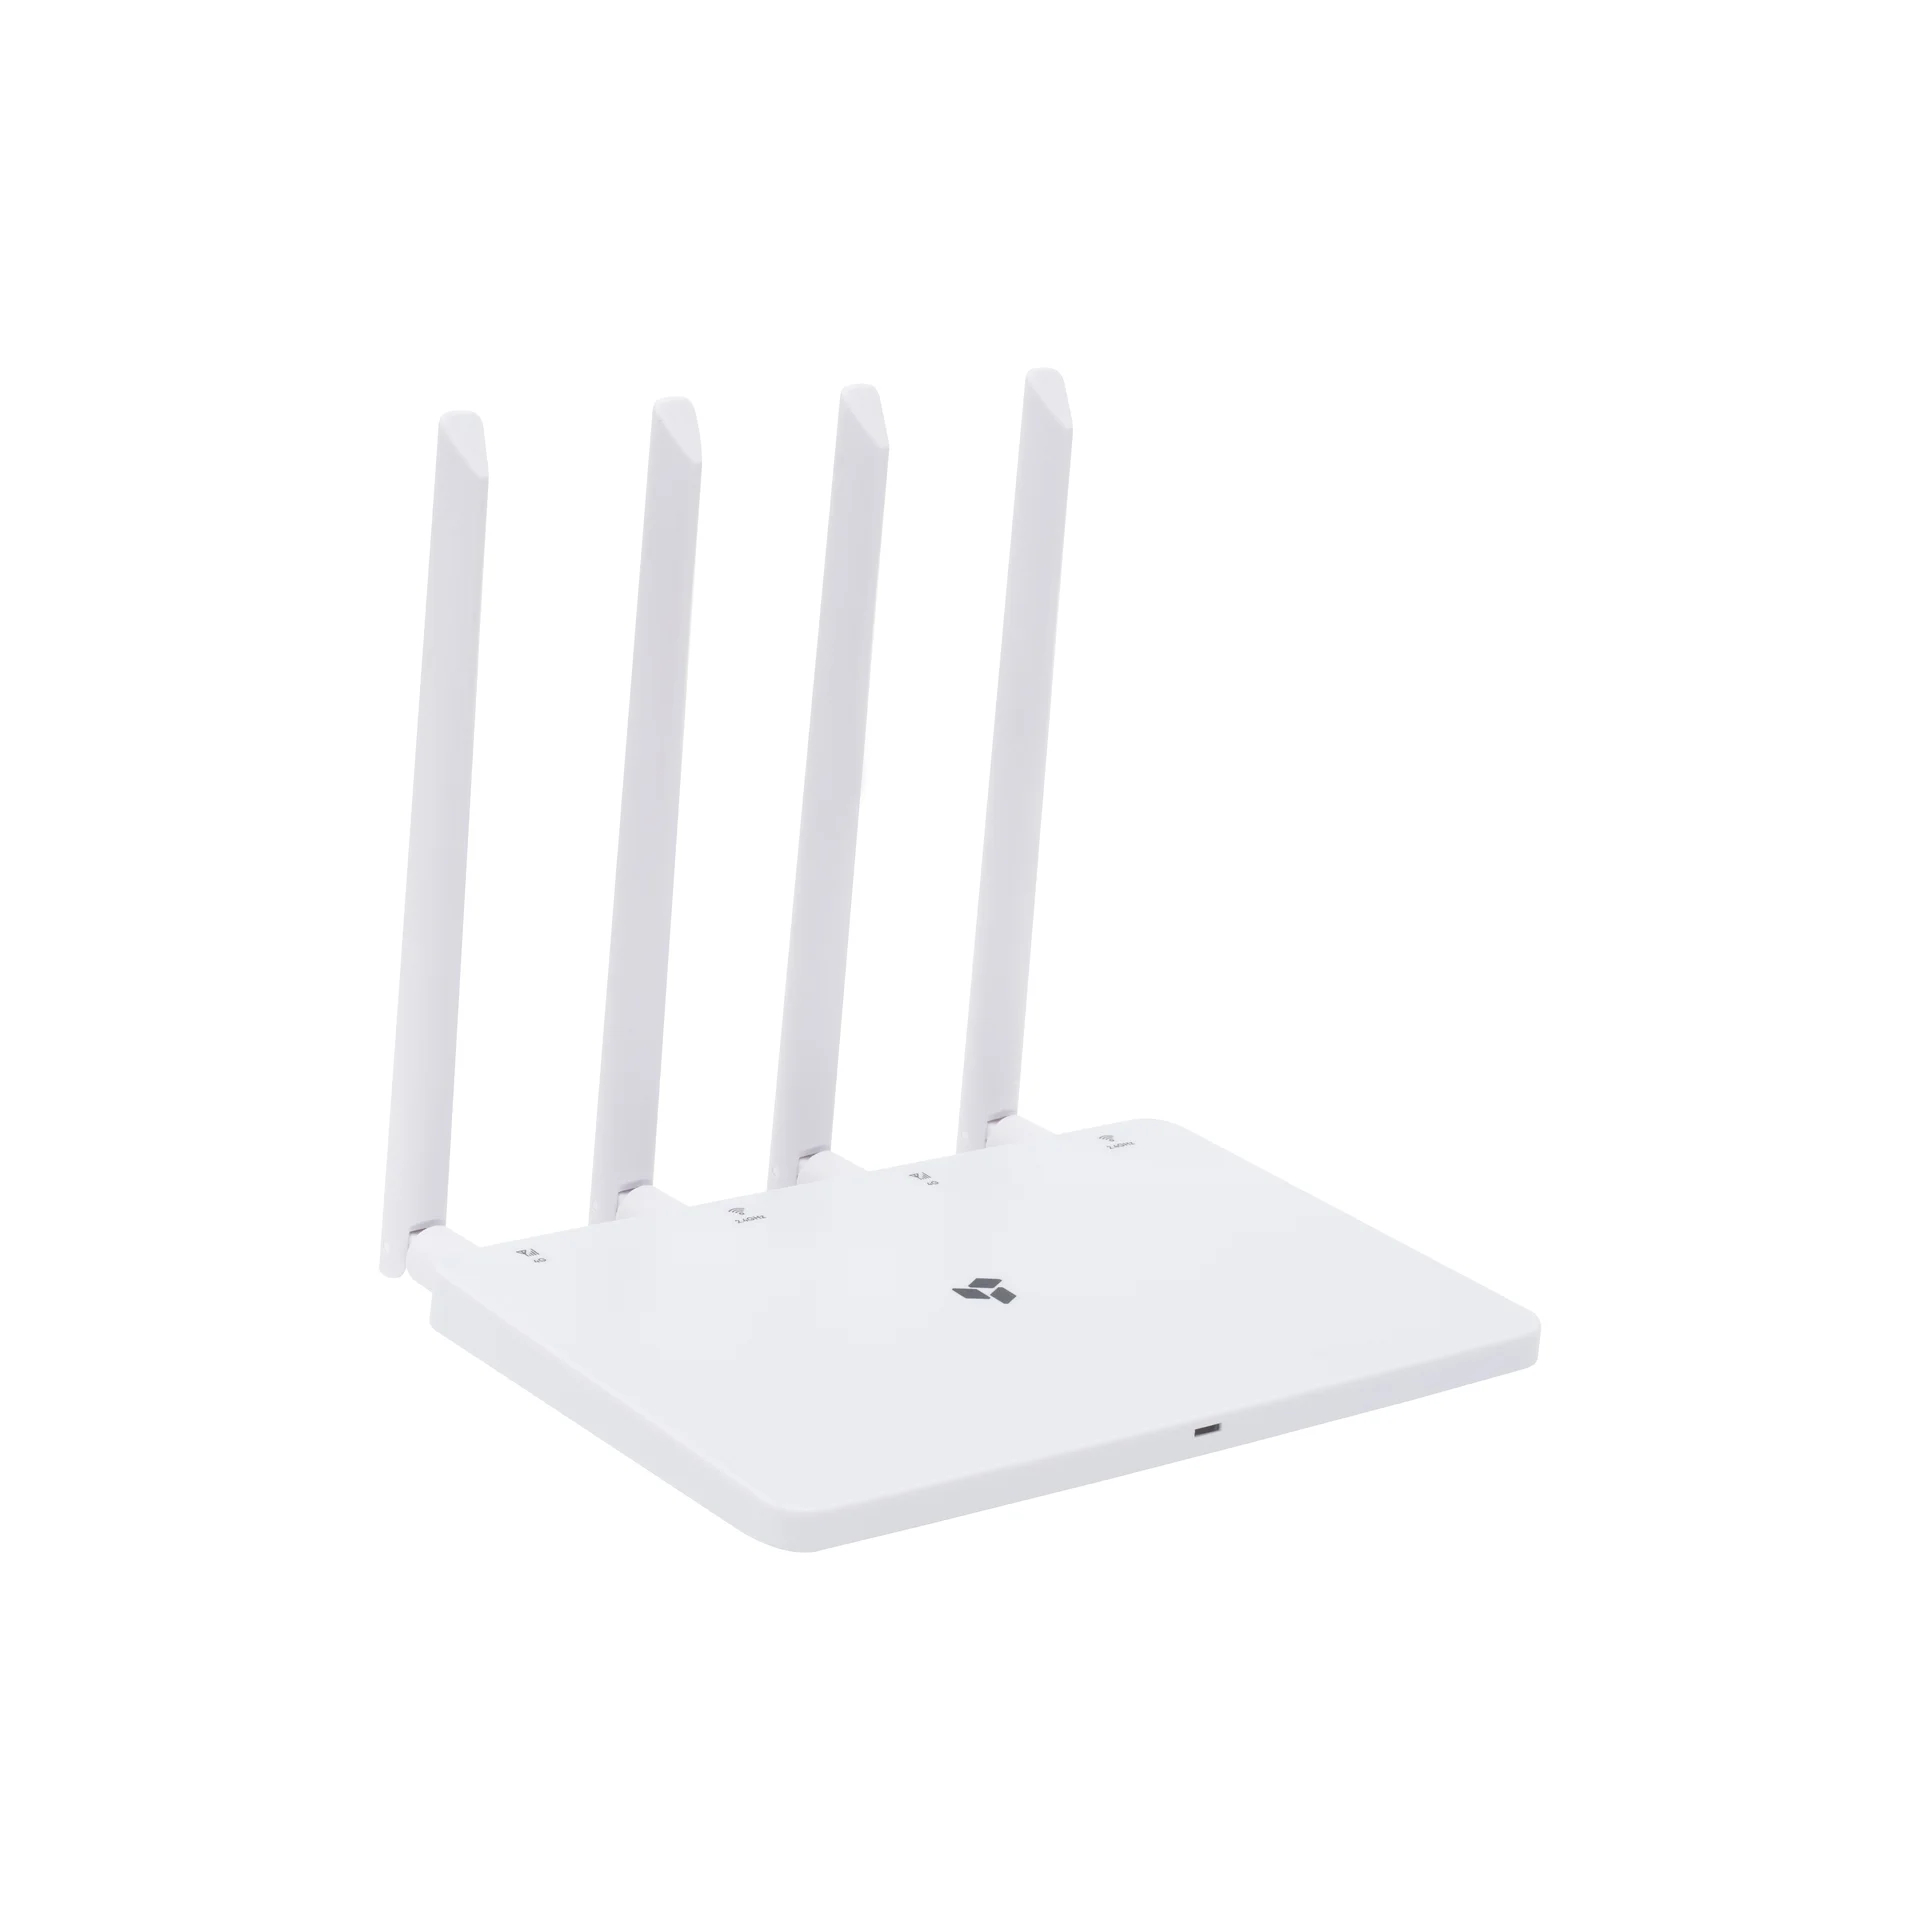 SNR-RT420-F21-LTE - Wi-Fi 4 роутер SNR LTE класса N300 с поддержкой LTE Cat.4, 802.11b/g/n, MIMO 4x5dBi, 2xLAN + 1xWAN RJ45. ПО EasyWRT, разработанное в России. купить в Казани 	Аппаратная платформа 			Порты WAN и LAN поддерживают скорость до 100 Мбит/сек;				Wi-Fi 4, MIMO 2x2